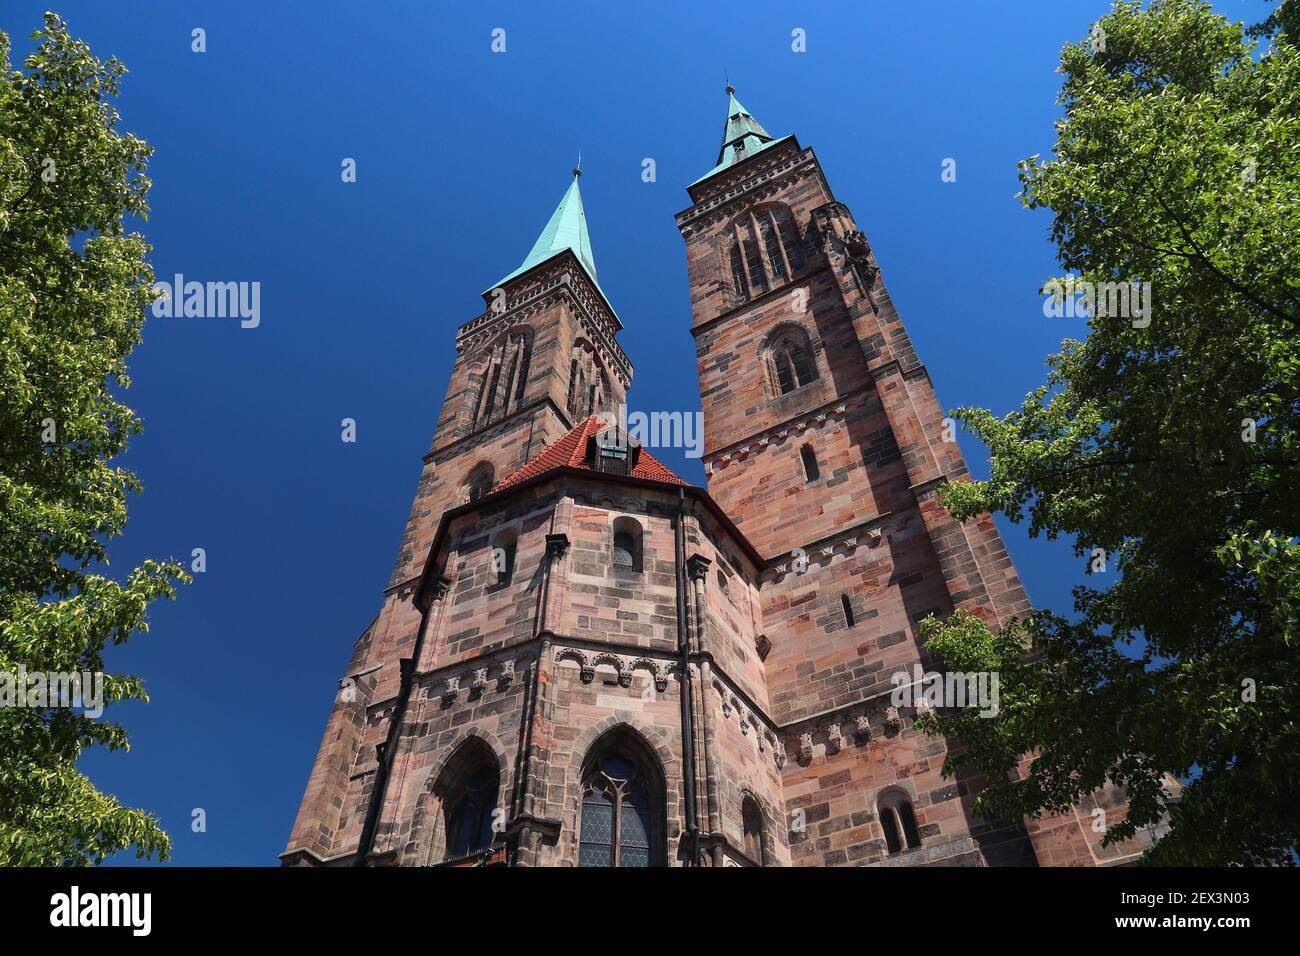 Germany landmarks - Nuremberg church of St. Sebaldus. Gothic architecture in Germany. Medieval Europe. Stock Photo